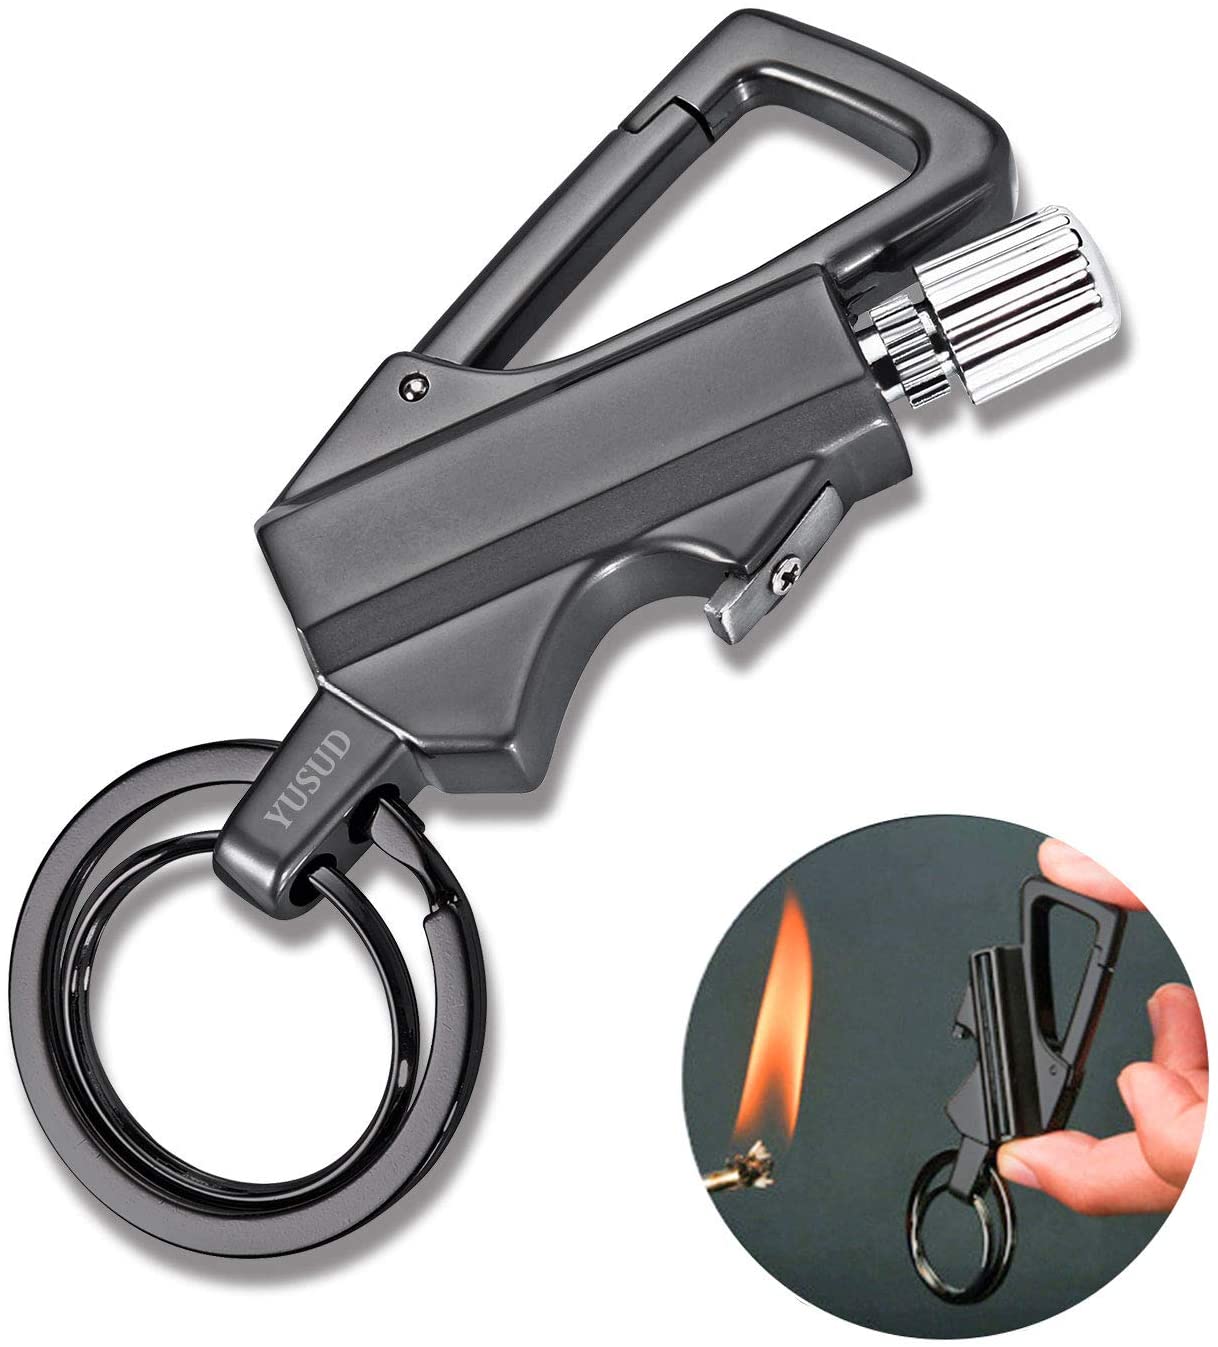 YUSUD Keychain Multitool with Flint Metal Matchstick Fire Starter and Bottle Opener, Great Kerosene Refillable Lighter, EDC Gift Ideas and Emergency Survival Gear